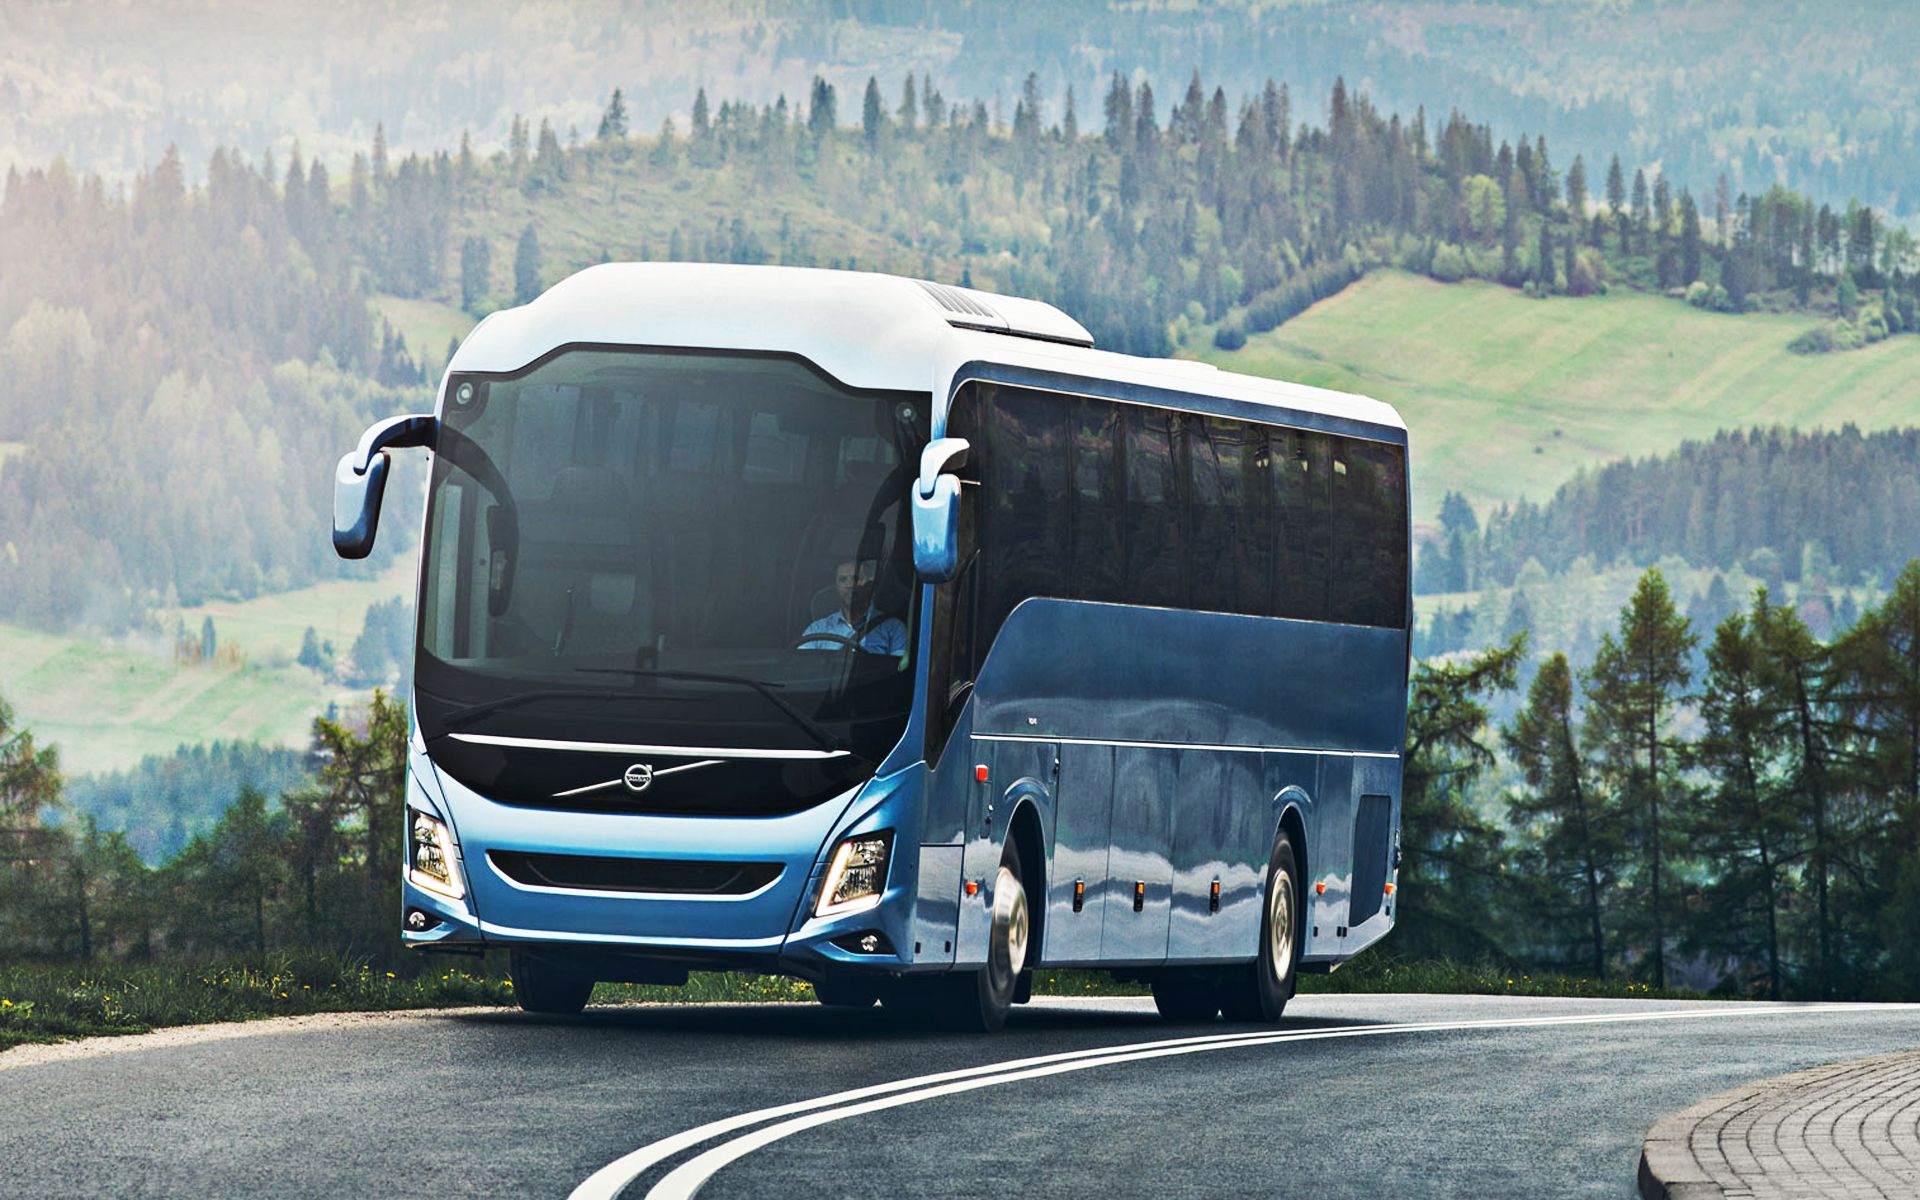 Download wallpaper Volvo new bus, passenger bus